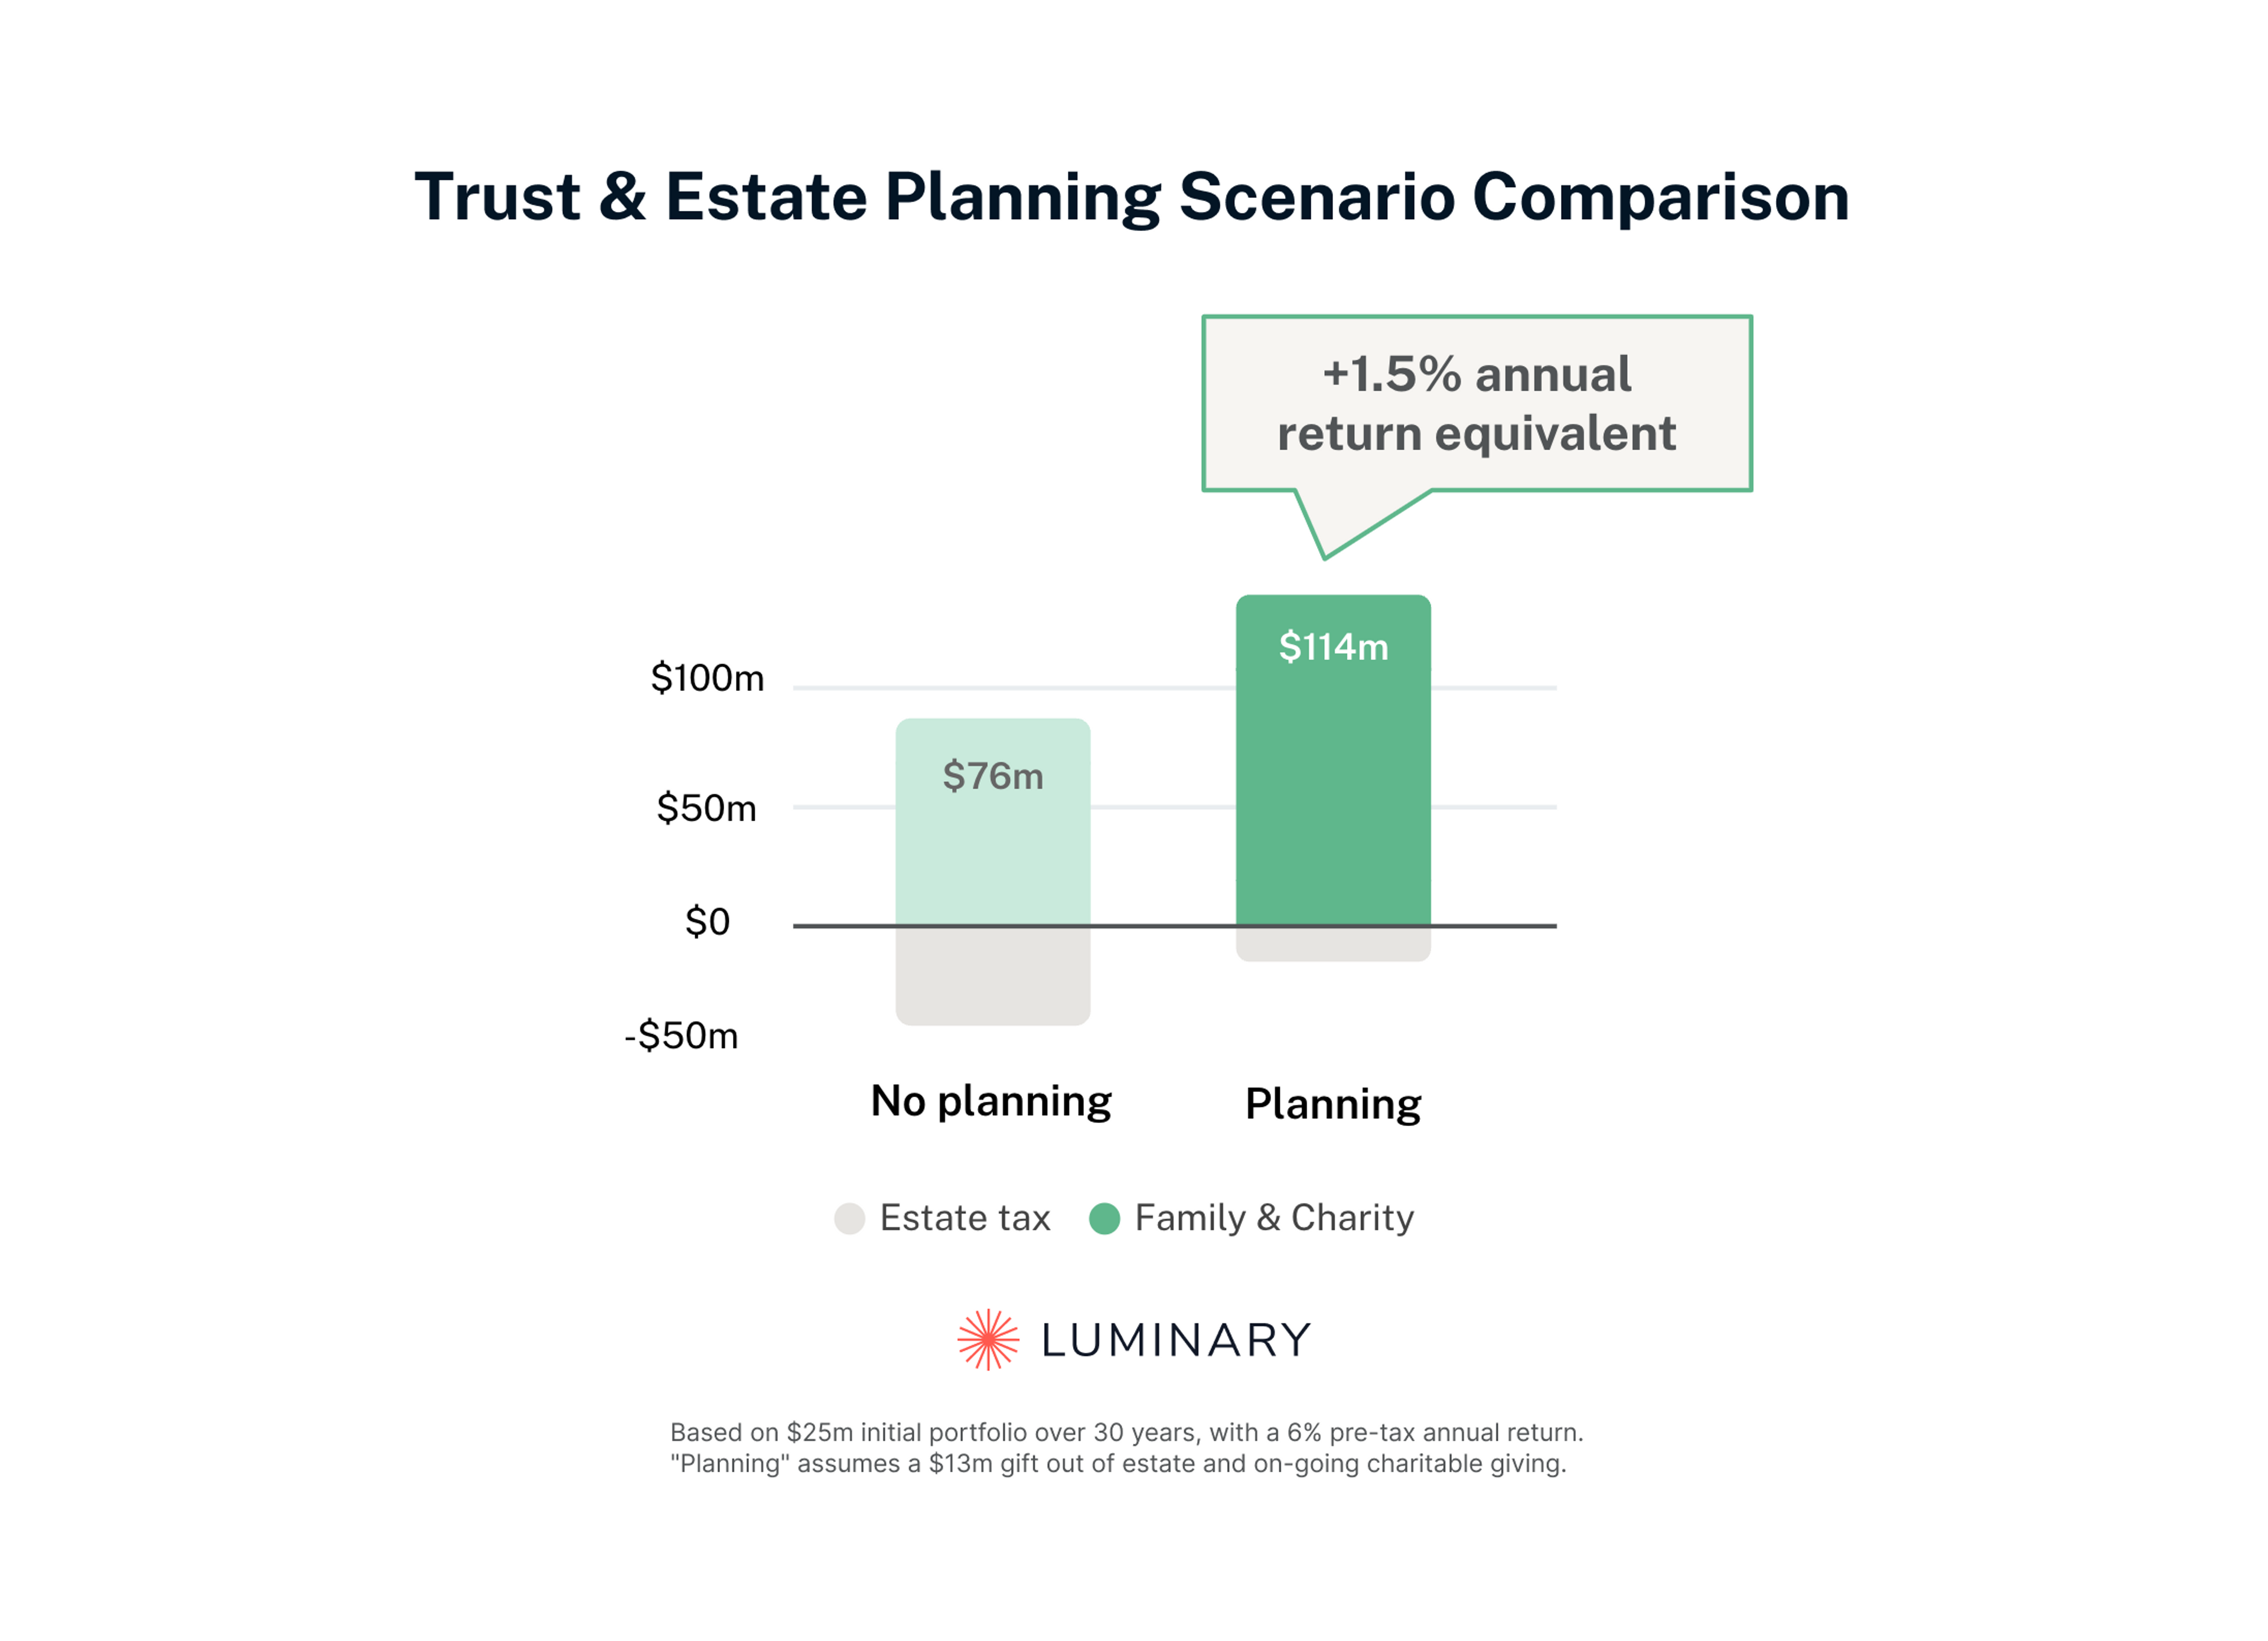 Trust & estate planning scenario comparison shows a 1.5% annual return equivalent